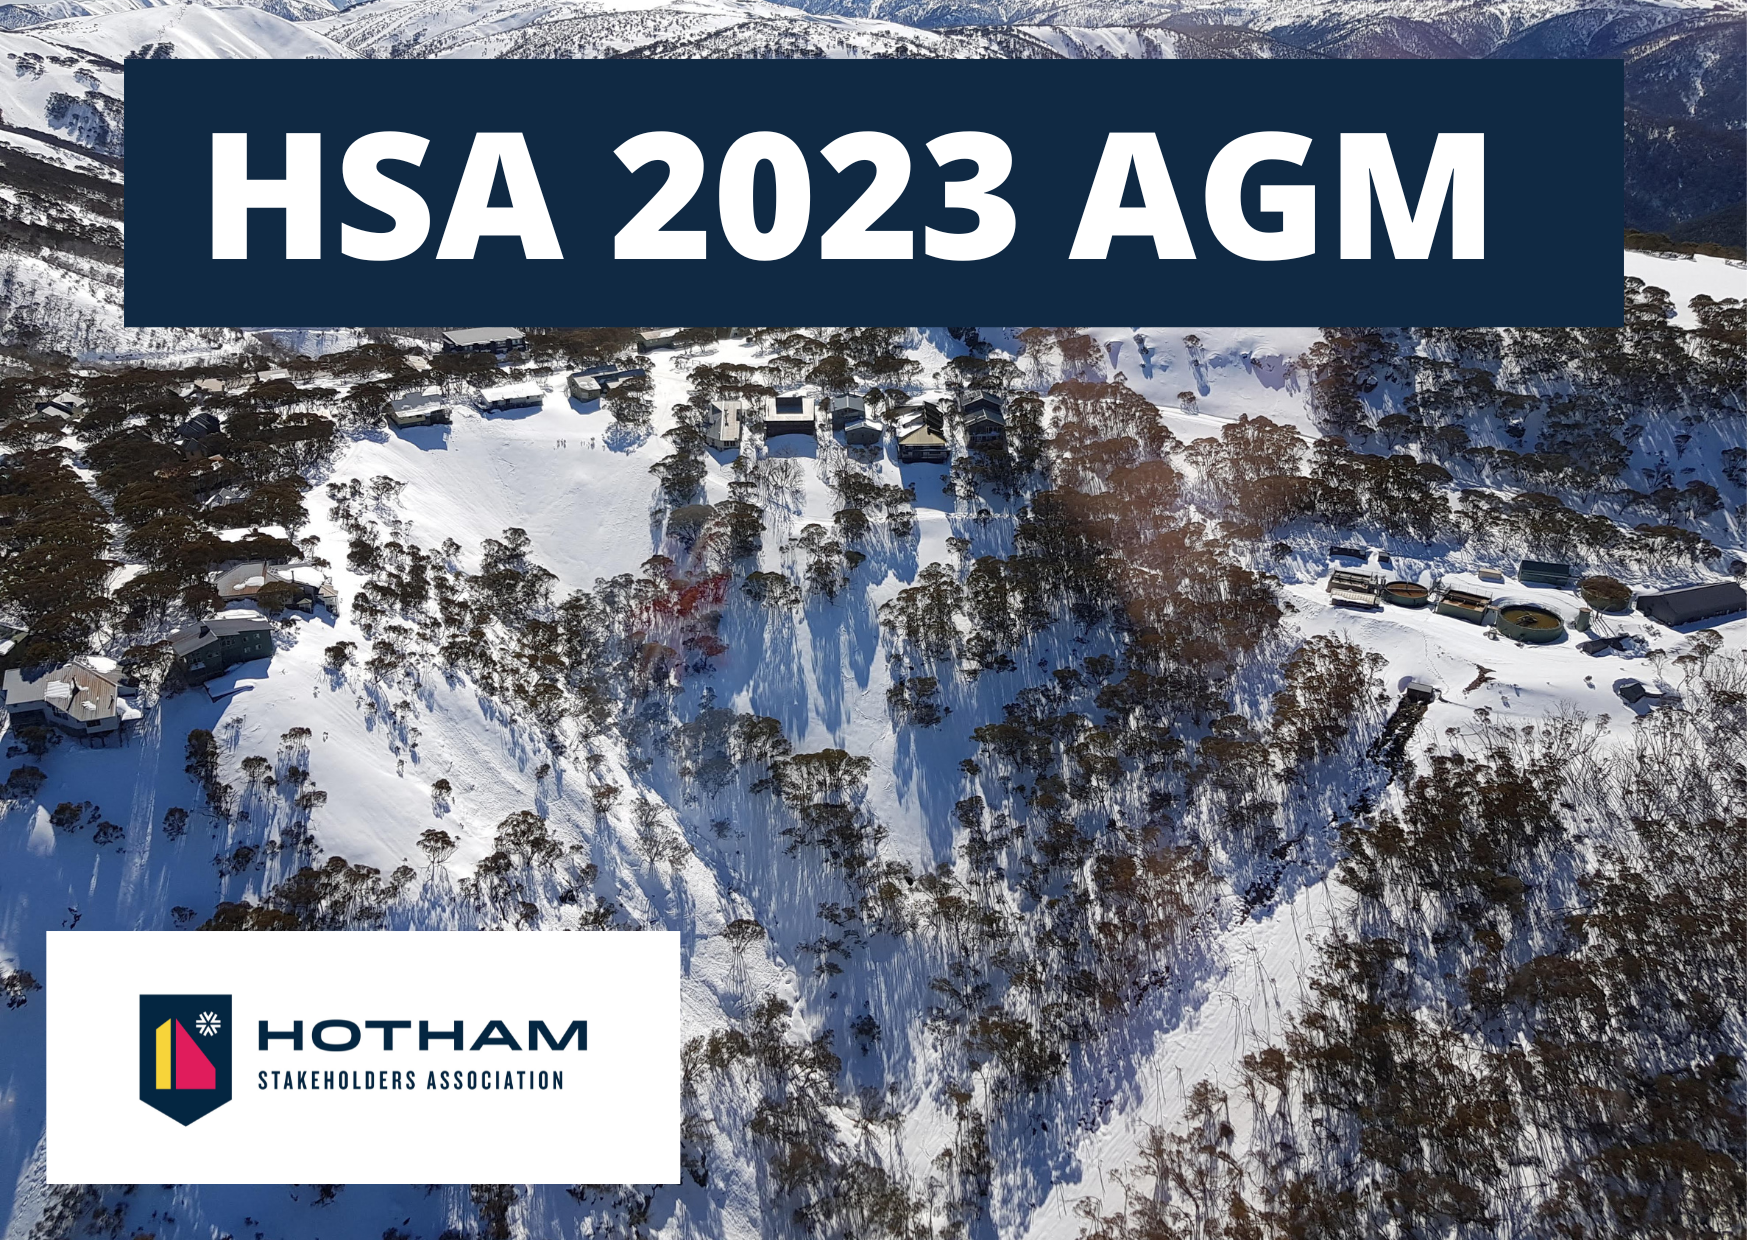 HSA AGM Image 2023